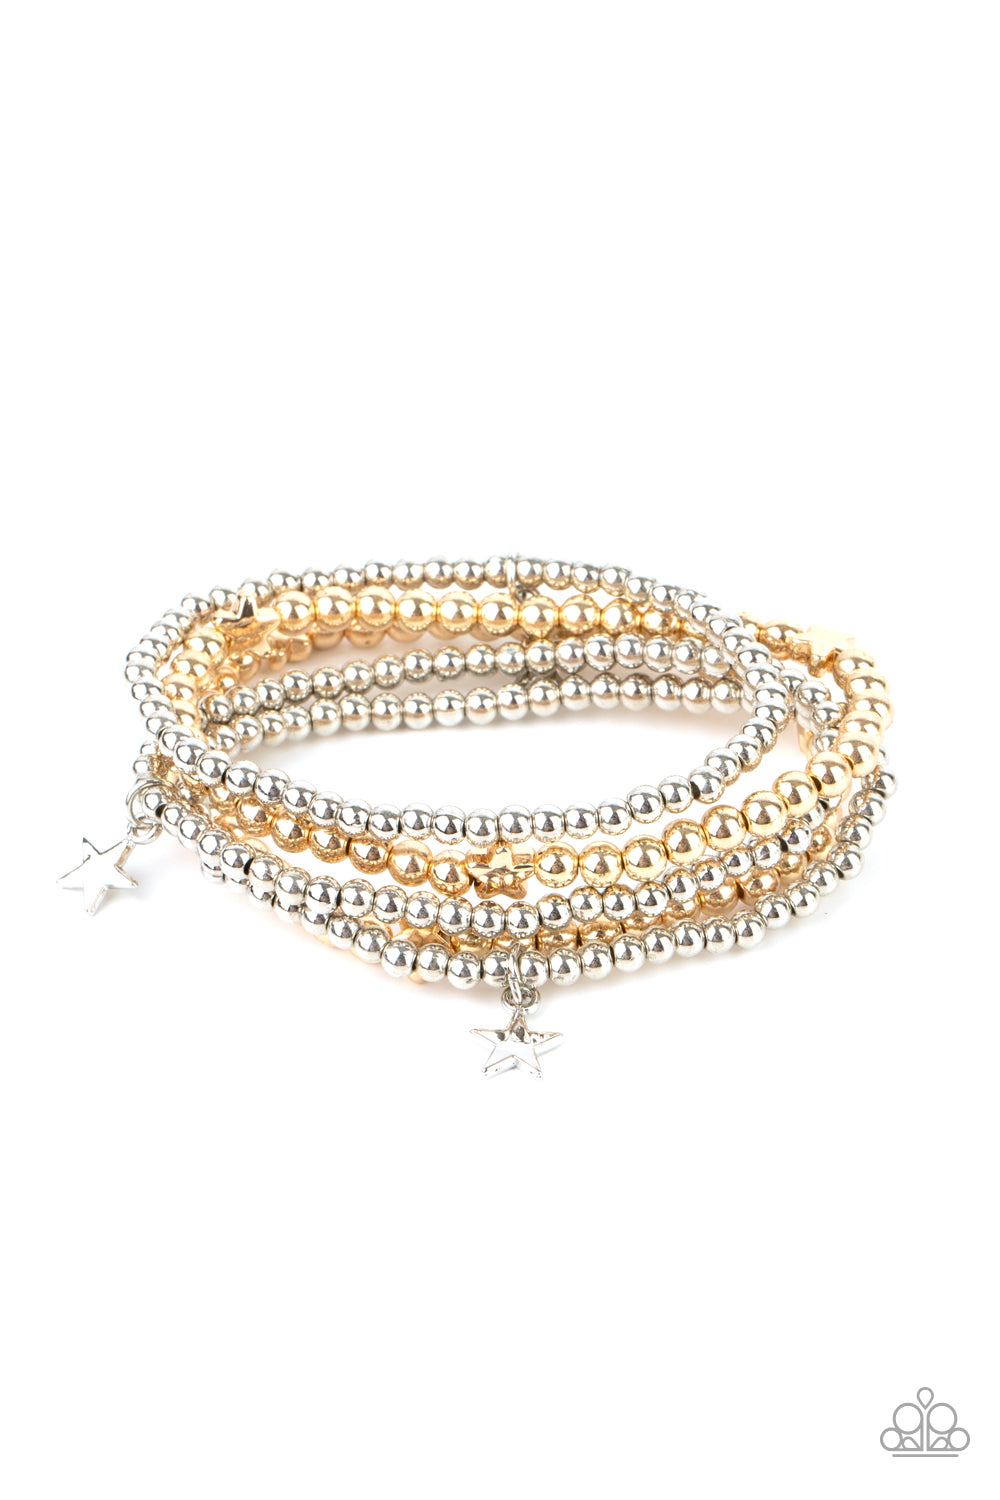 Paparazzi Jewelry - American All-Star - Charmed Bracelets Paparazzi jewelry images